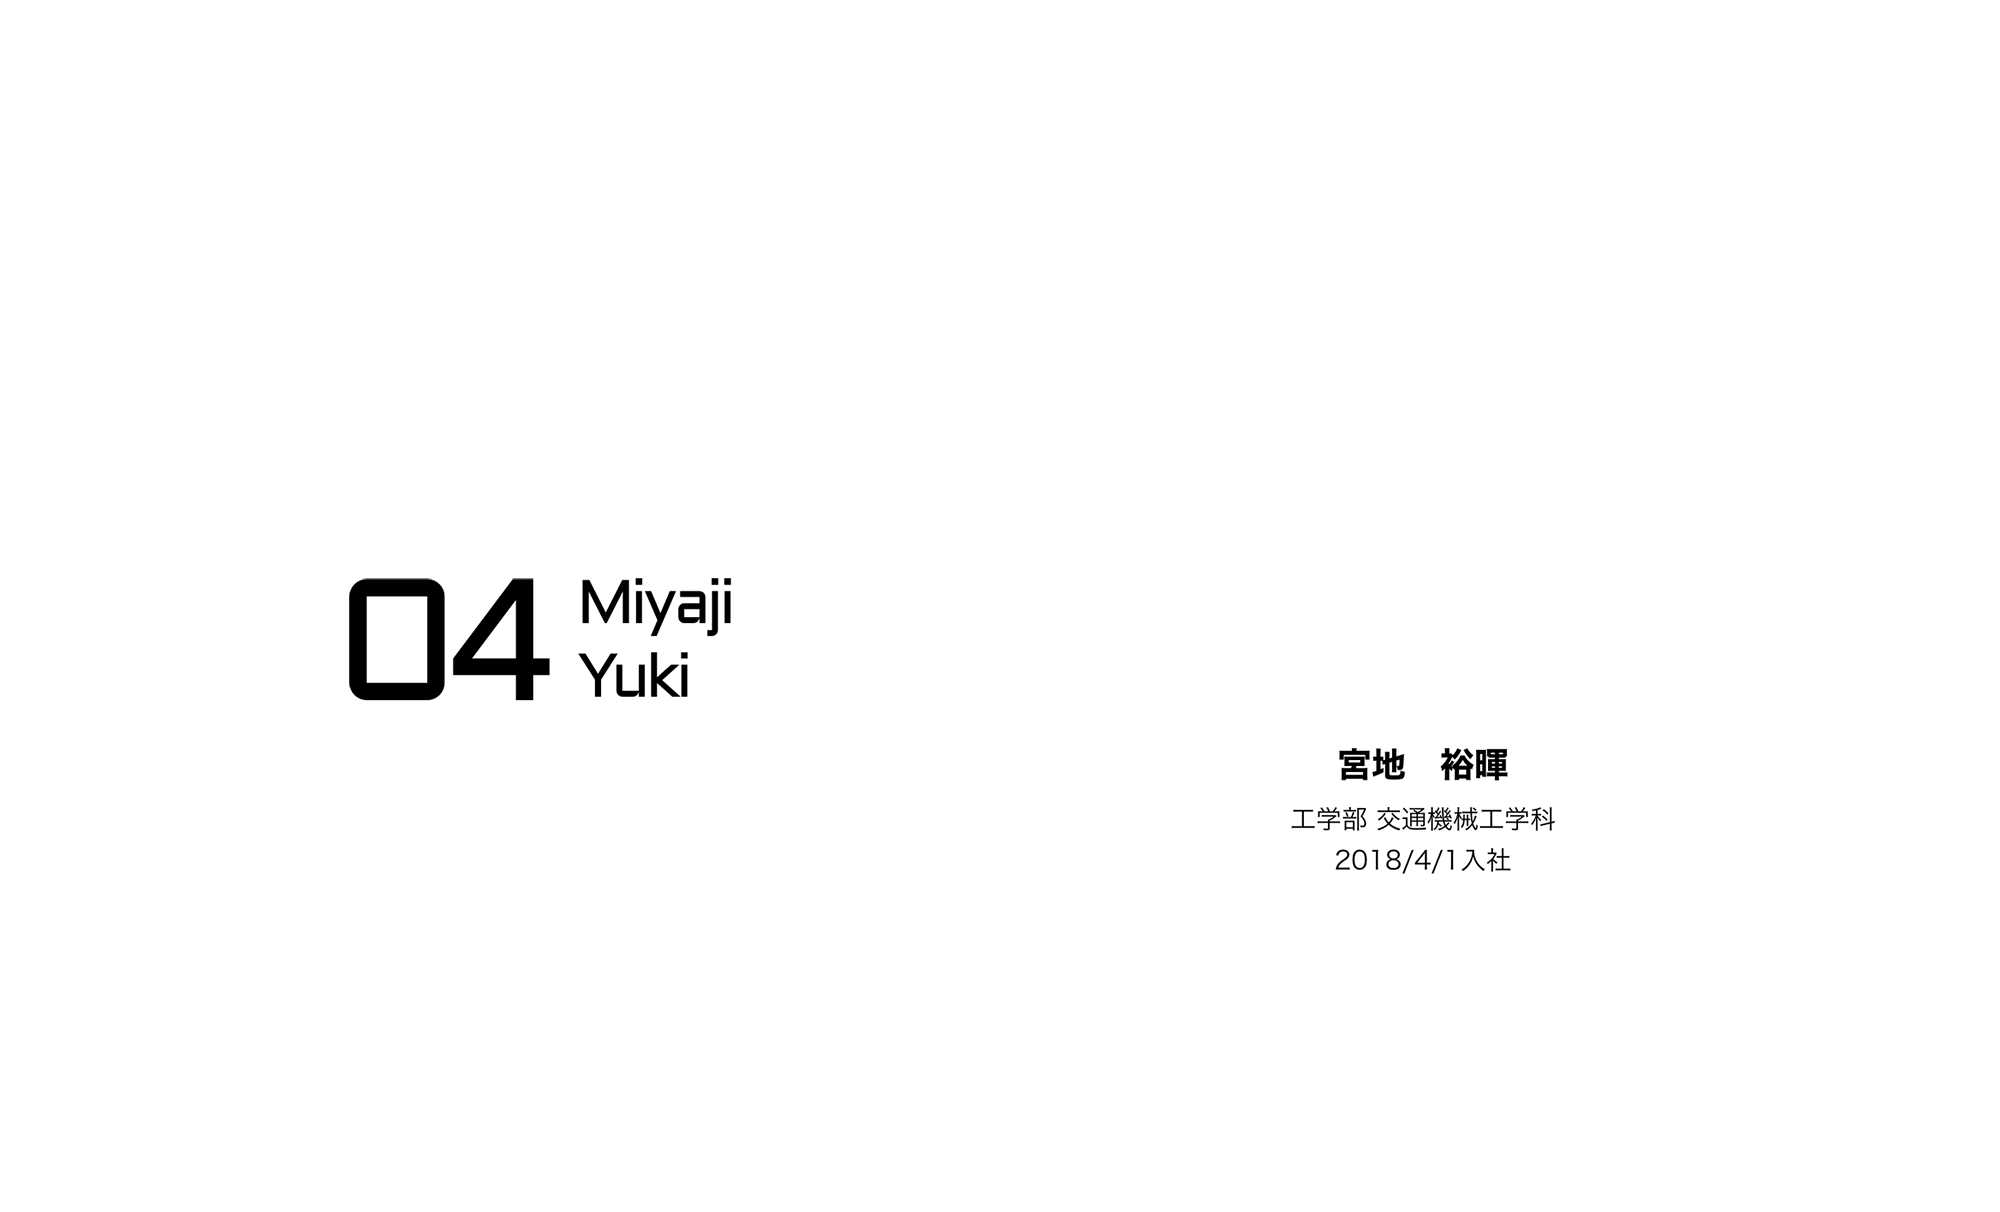 04 Miyaji Yuki / 宮地　裕暉 / 工学部 交通機械工学科 / 2018/4/1入社